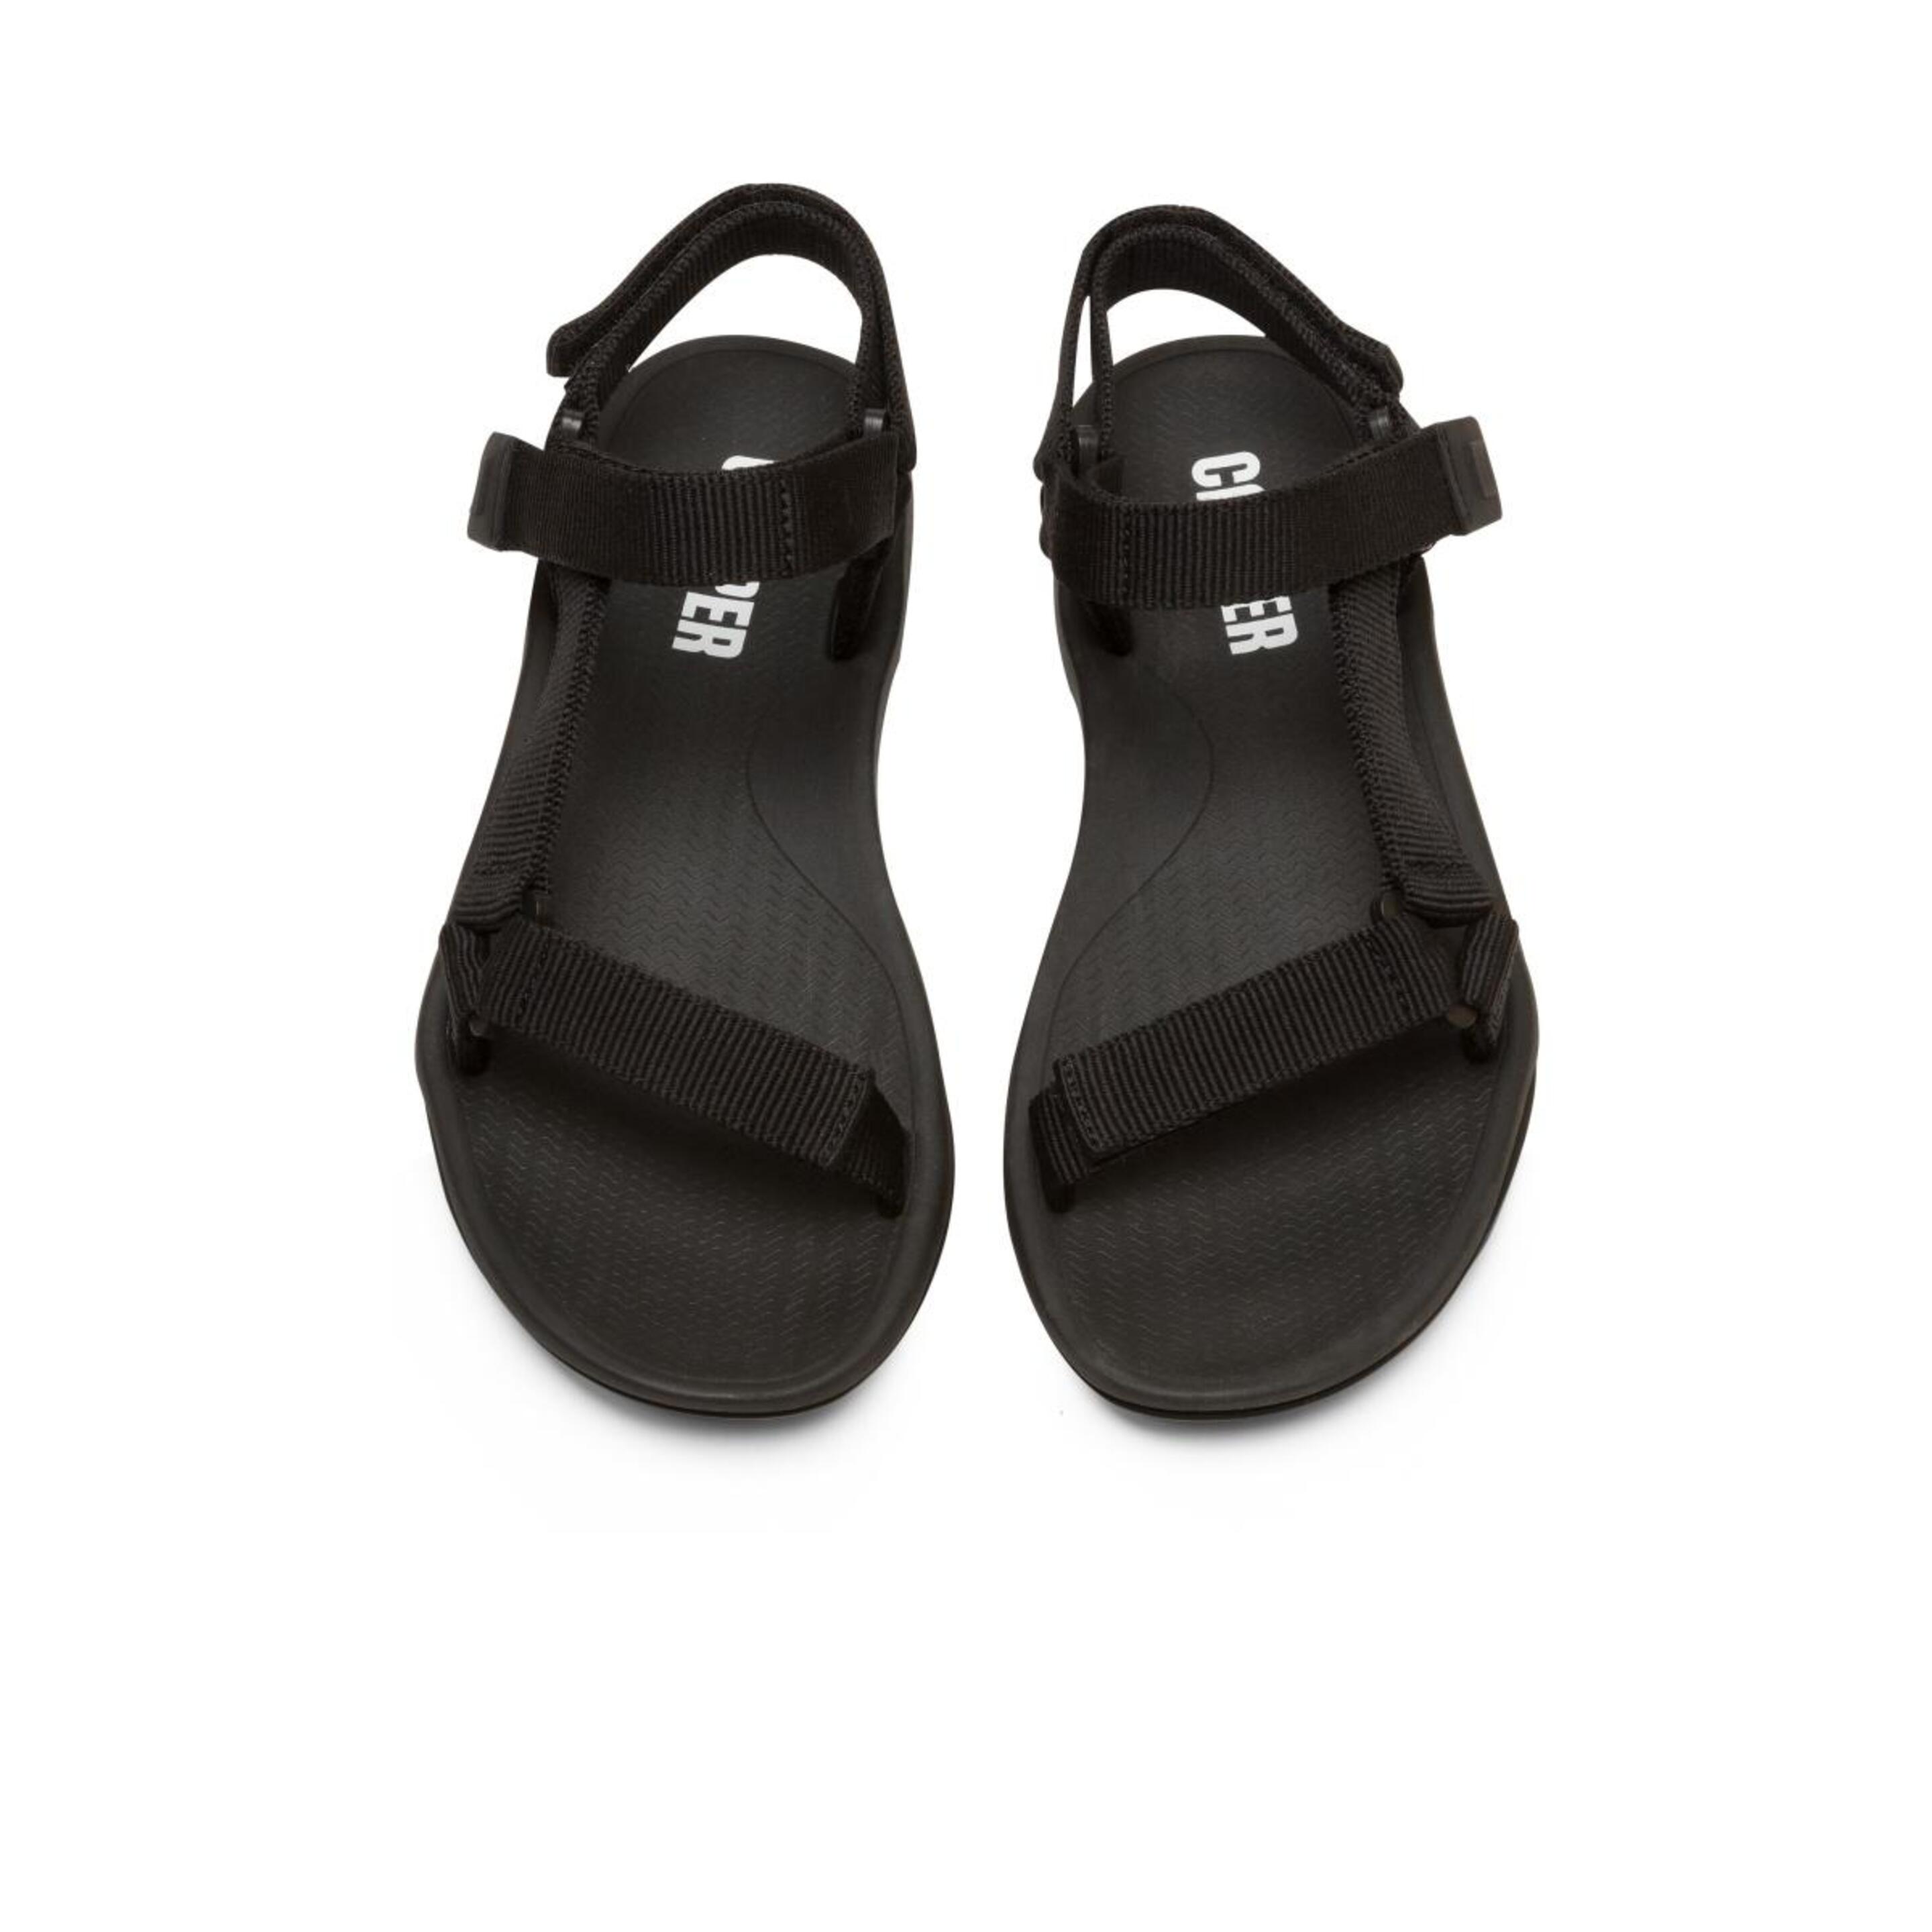 Sandalias Match Camper - negro - Zapatos Mujer  MKP